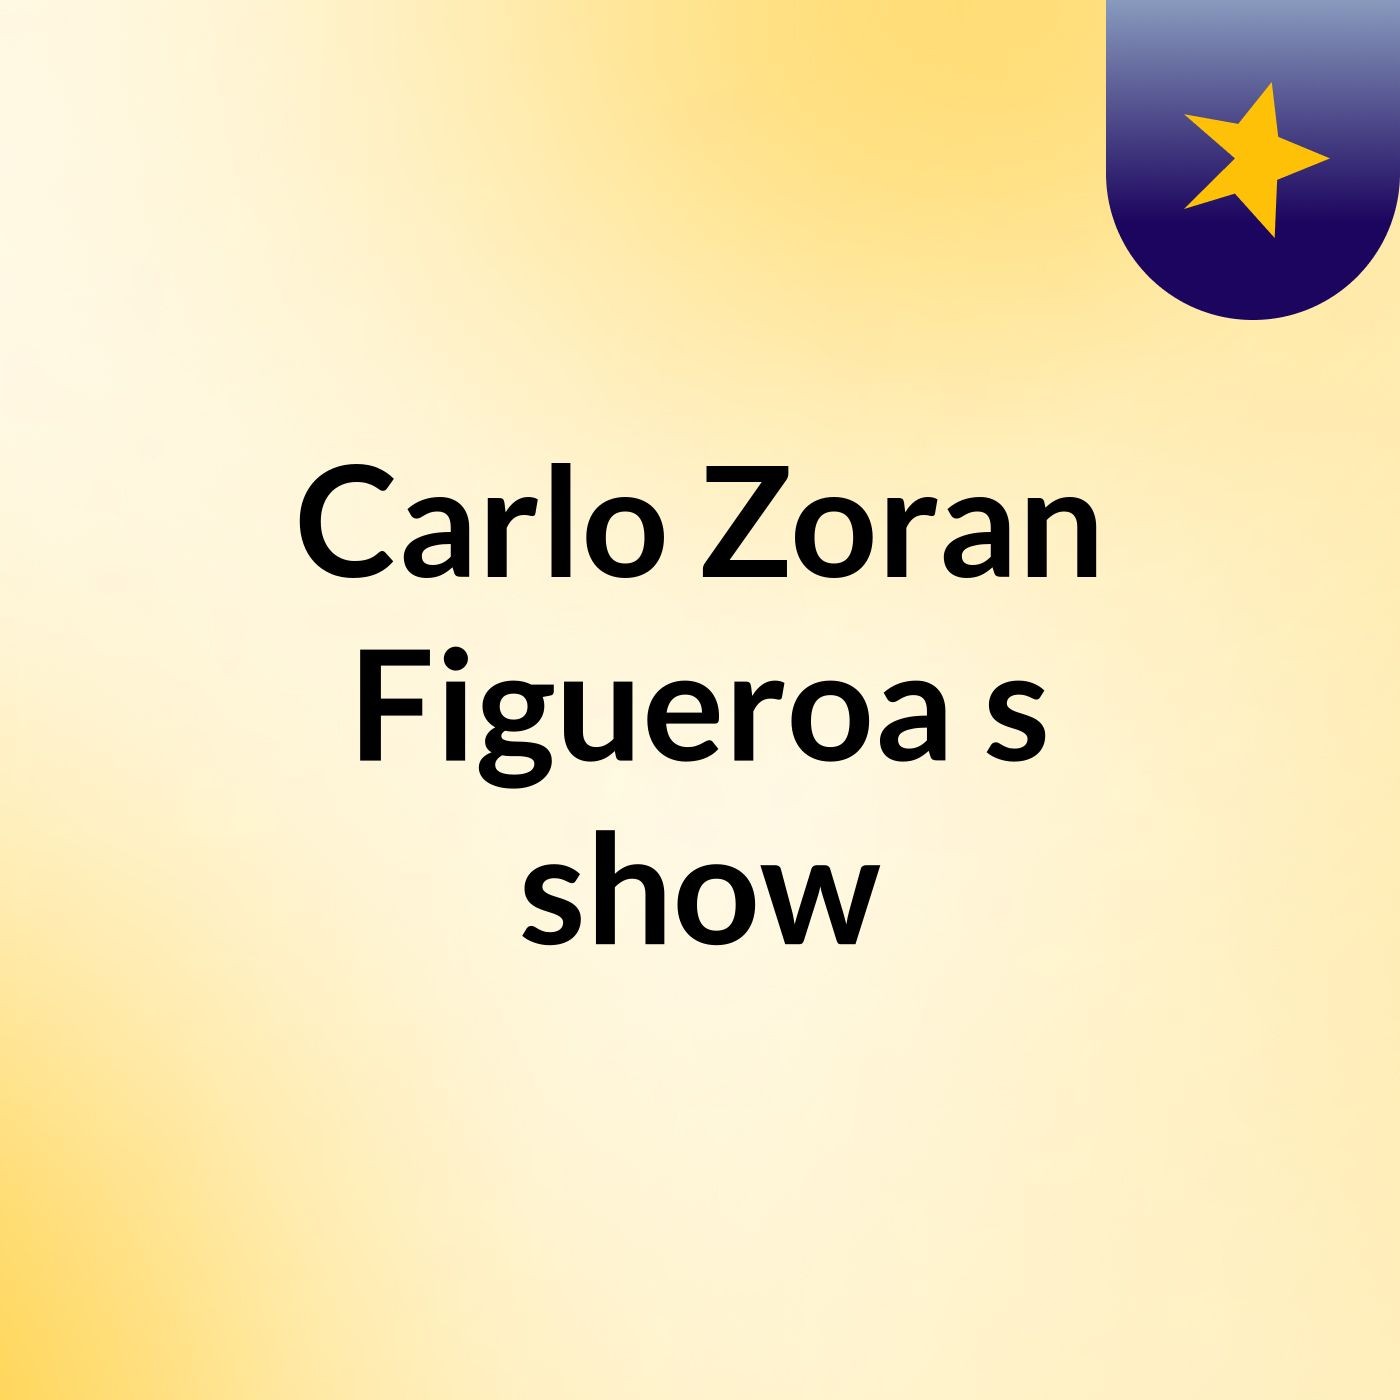 Carlo Zoran Figueroa's show